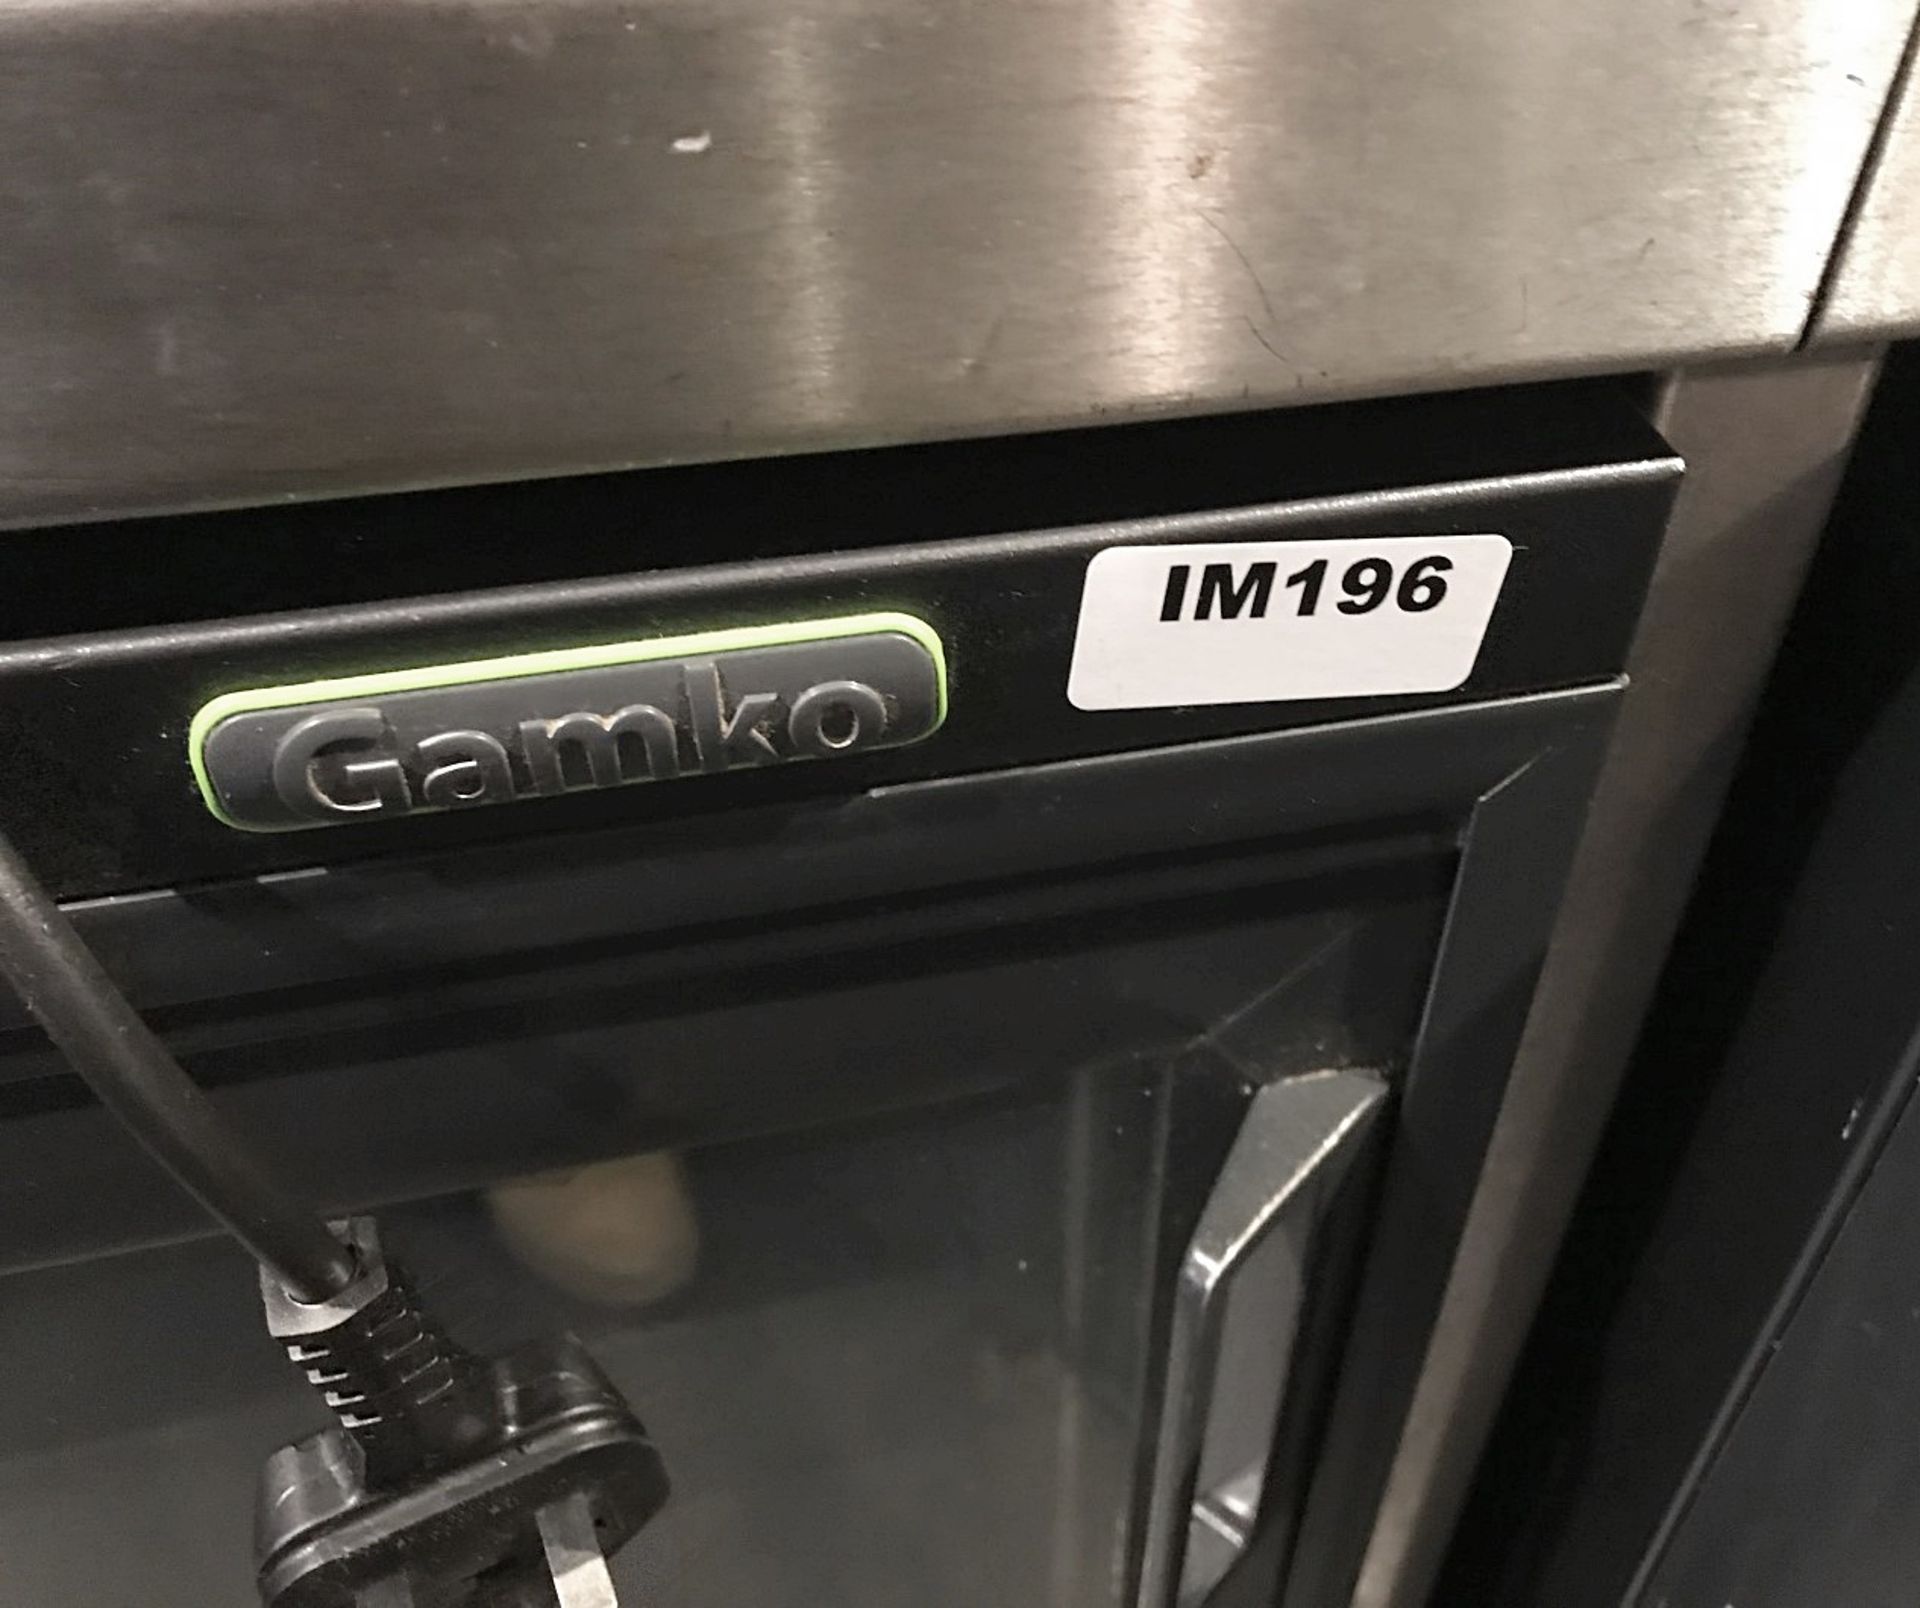 1 x Gamko Backbar Two Sliding Door Bottle Cooler (Model MG2/250SD) - CL554 - Ref IM196 - Location: - Image 2 of 3